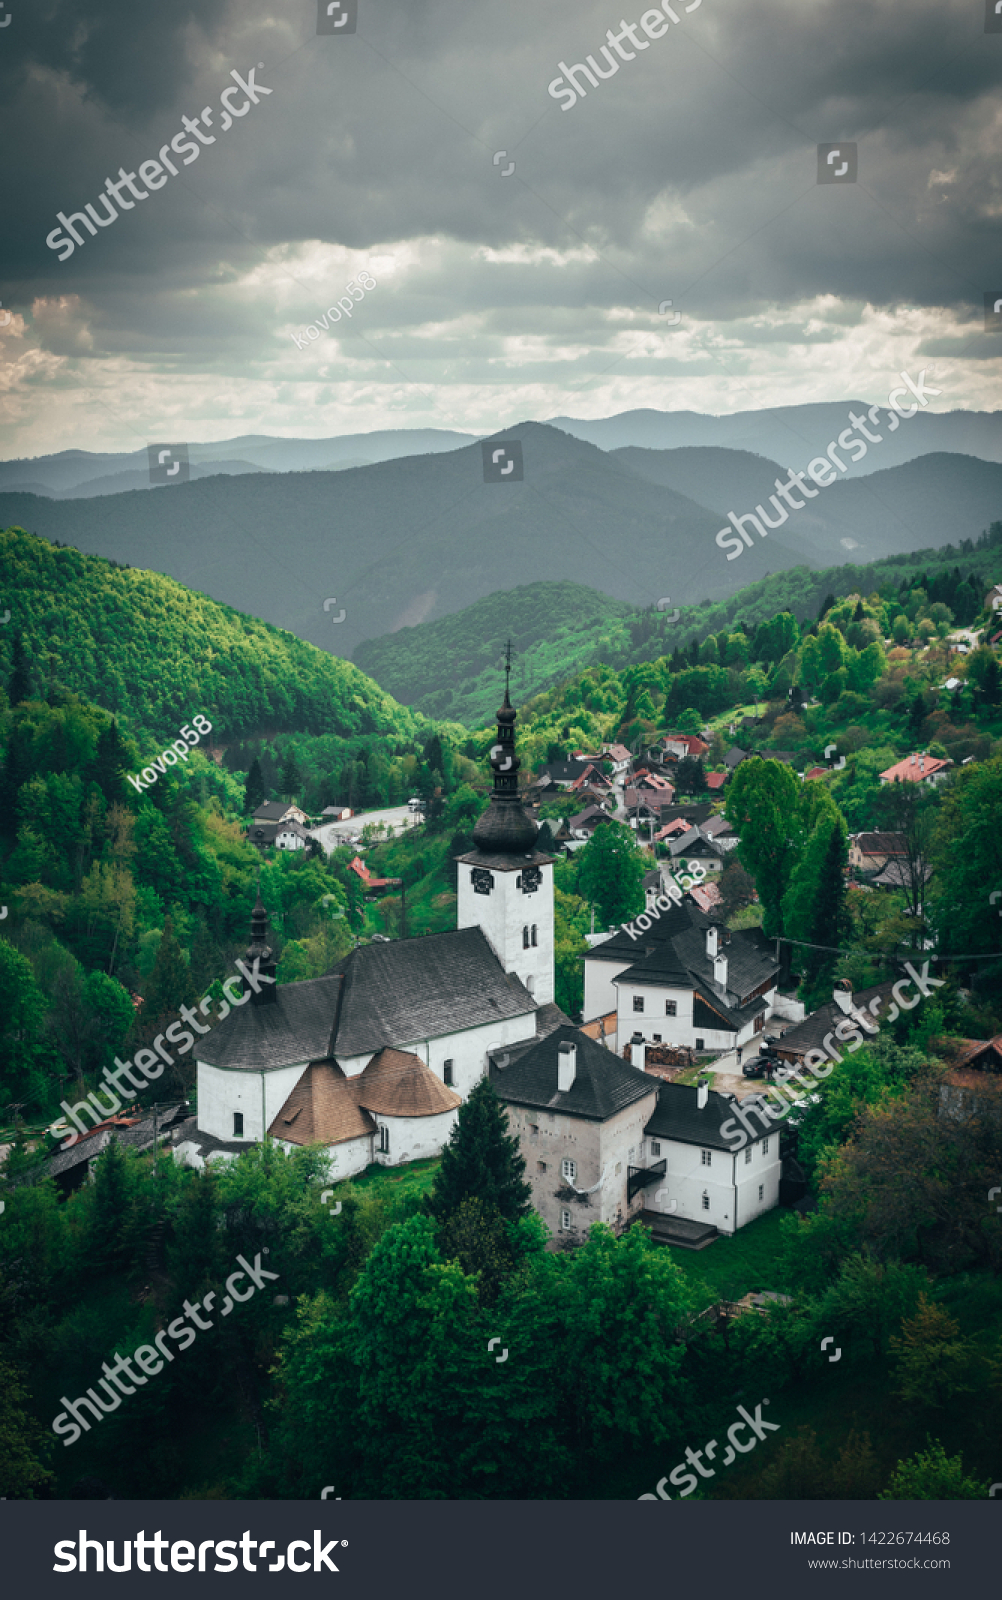 Spania dolina church, Slovakia, summer, edit space #1422674468